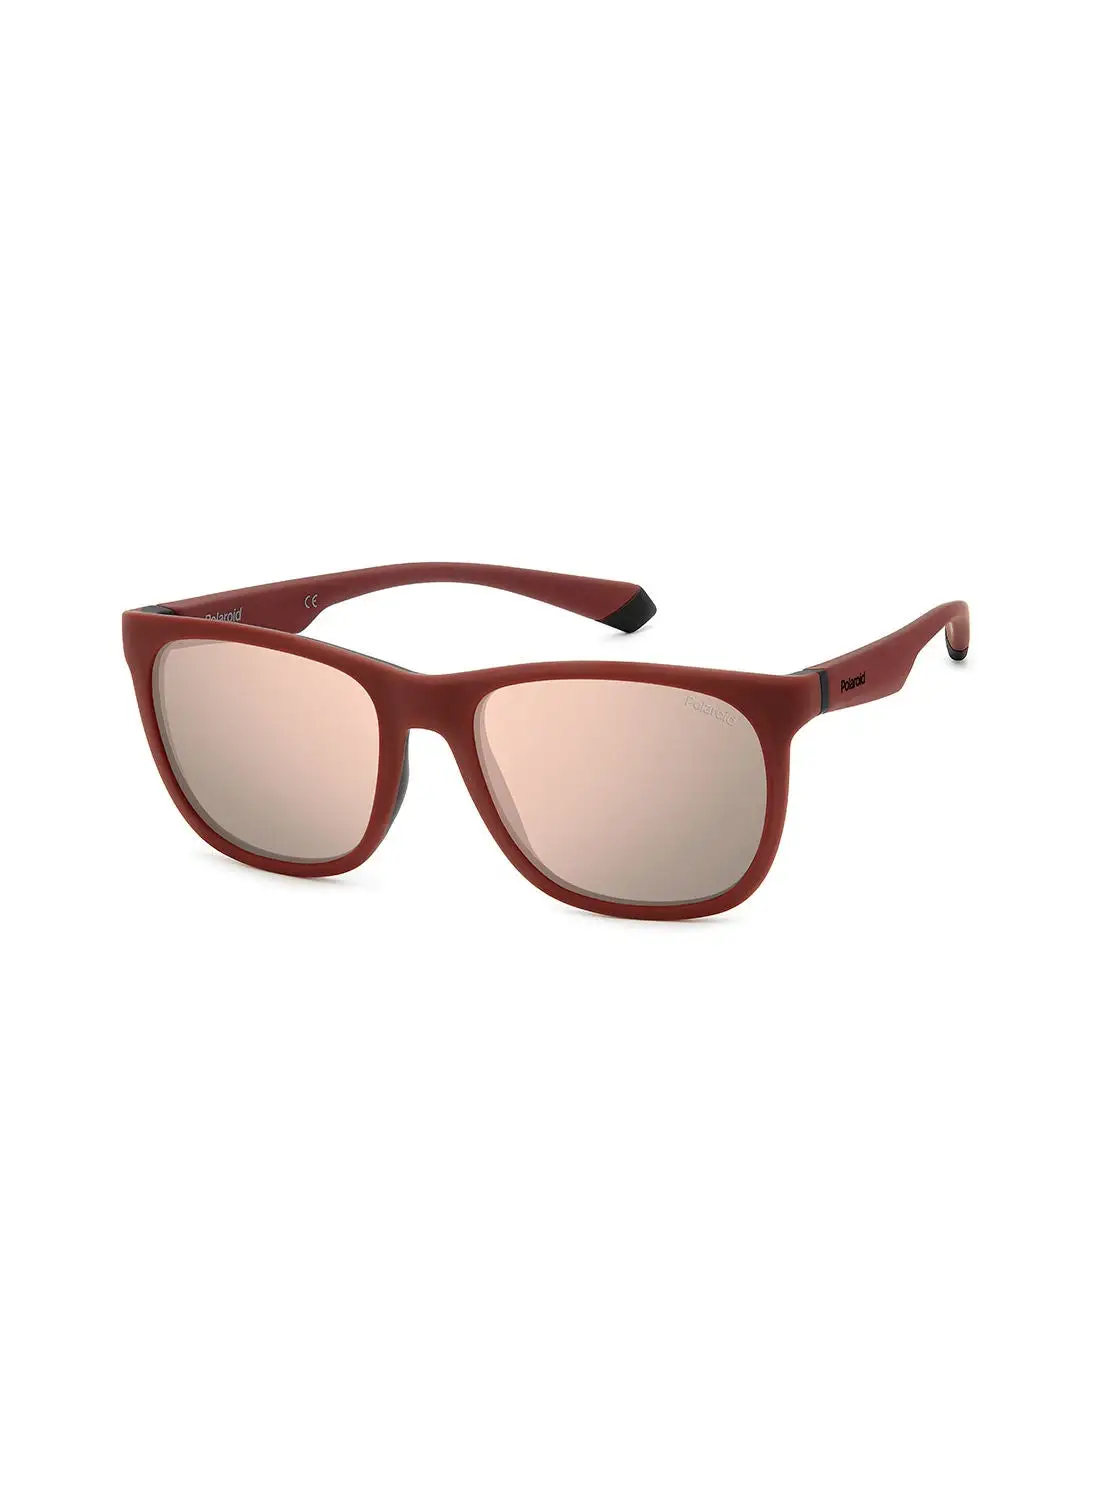 Polaroid Unisex UV Protection Square Sunglasses - Pld 2140/S Mtburg Bk 55 - Lens Size: 55 Mm